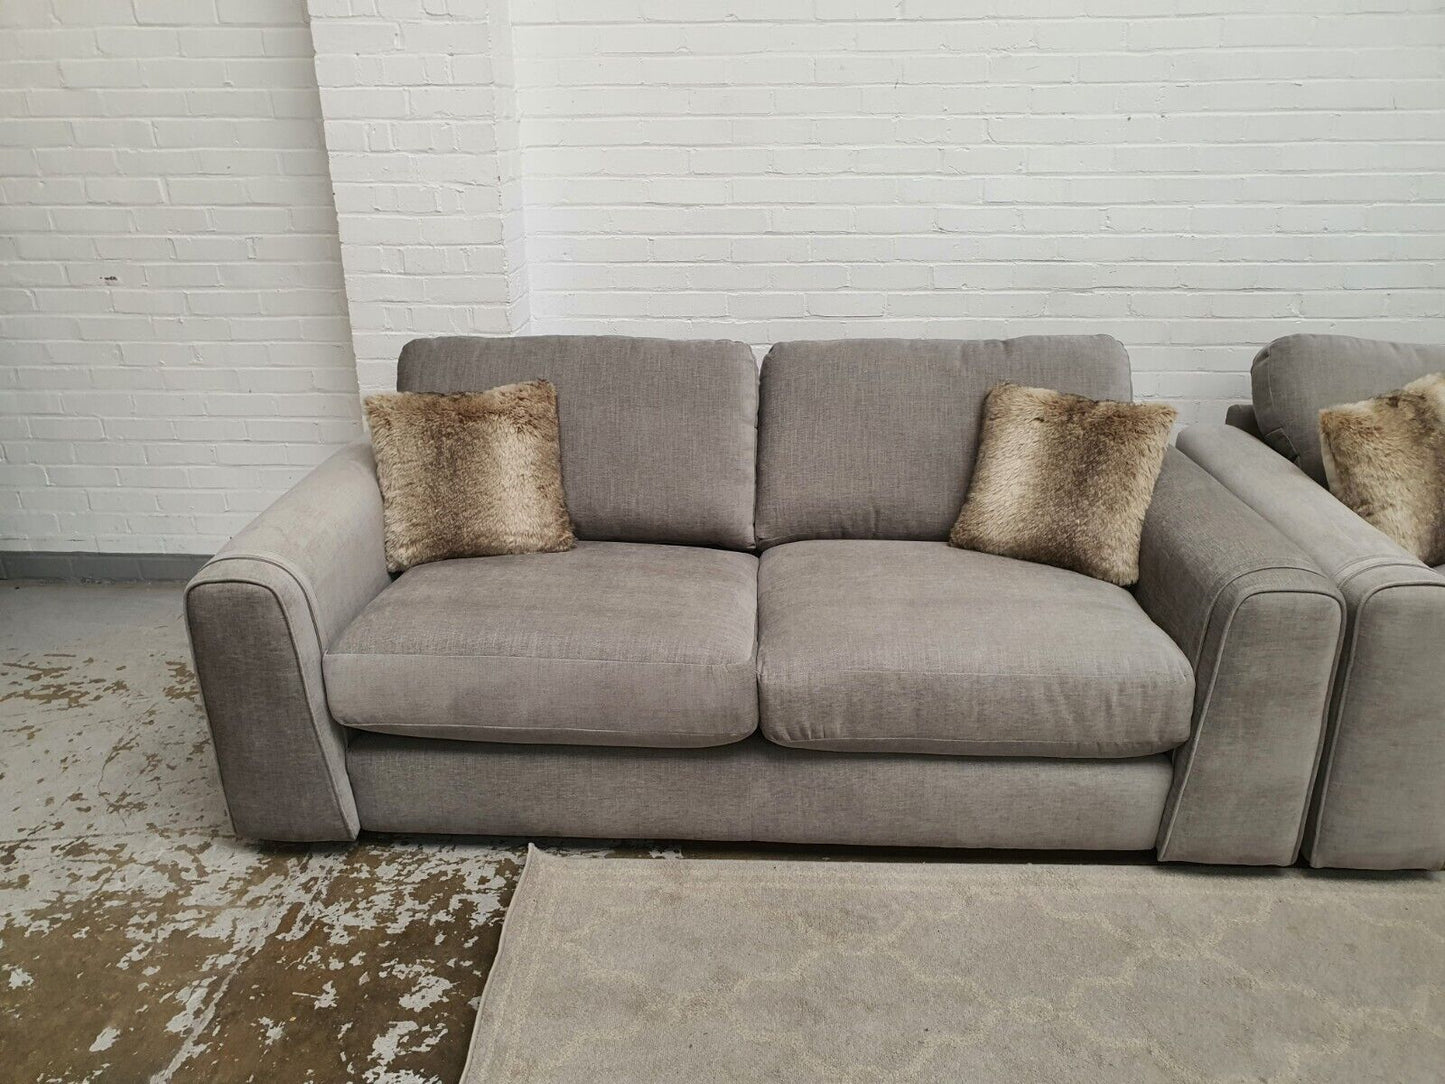 Barker & Stonehouse. Grey sofas 2 x 3 seater